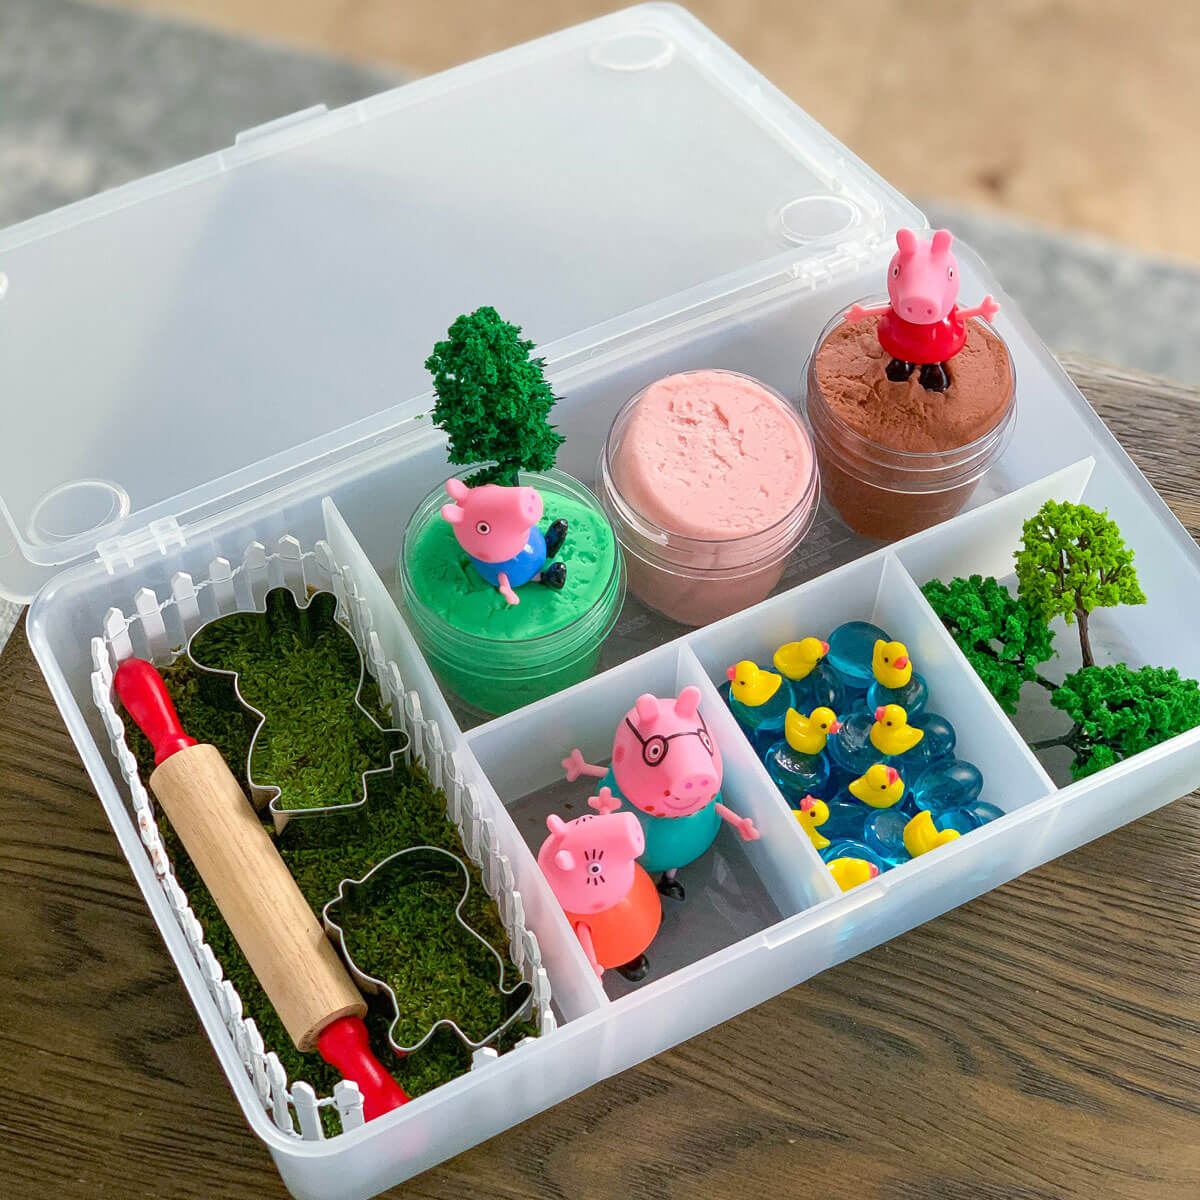 Peppa Pig Activity – Make This Adorable Play Dough Kit